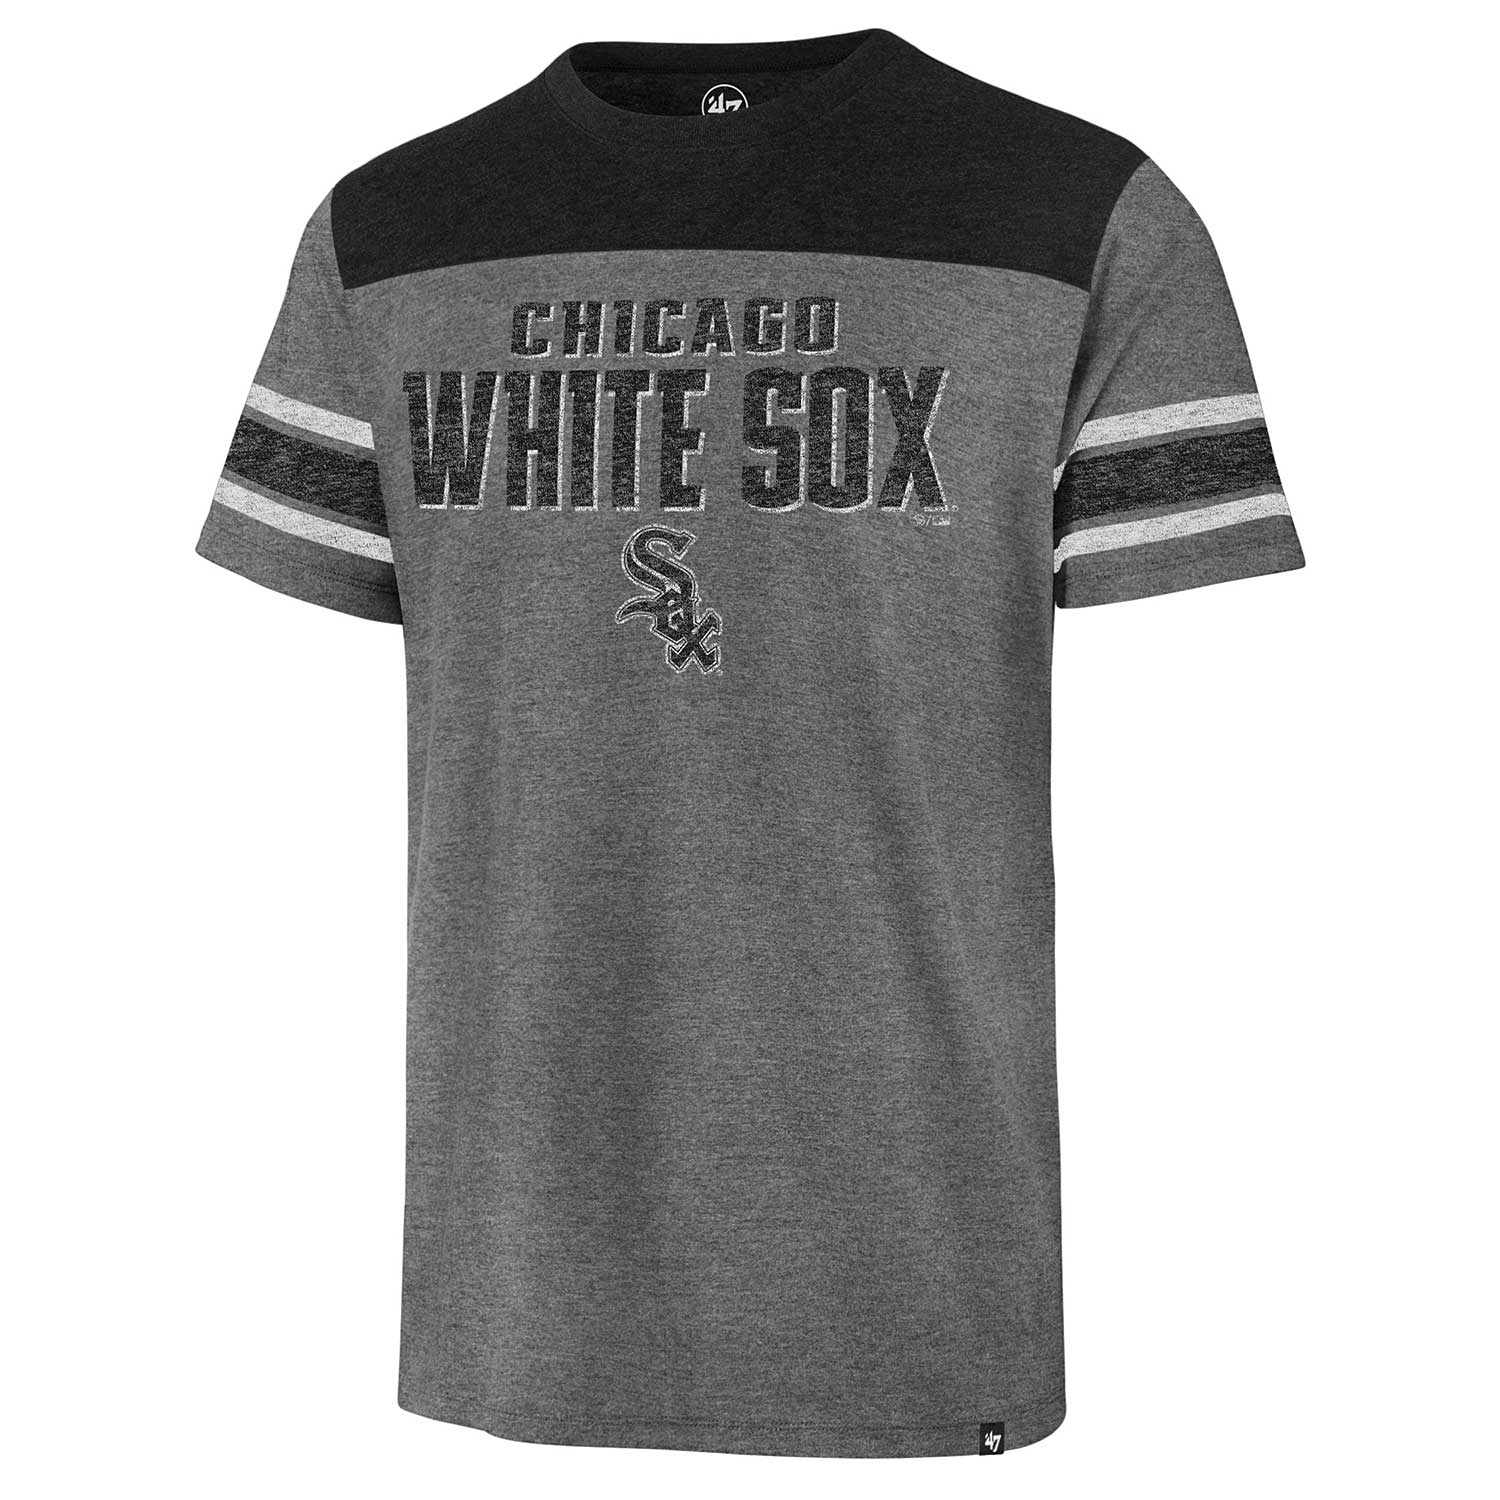 chicago white sox shirts near me